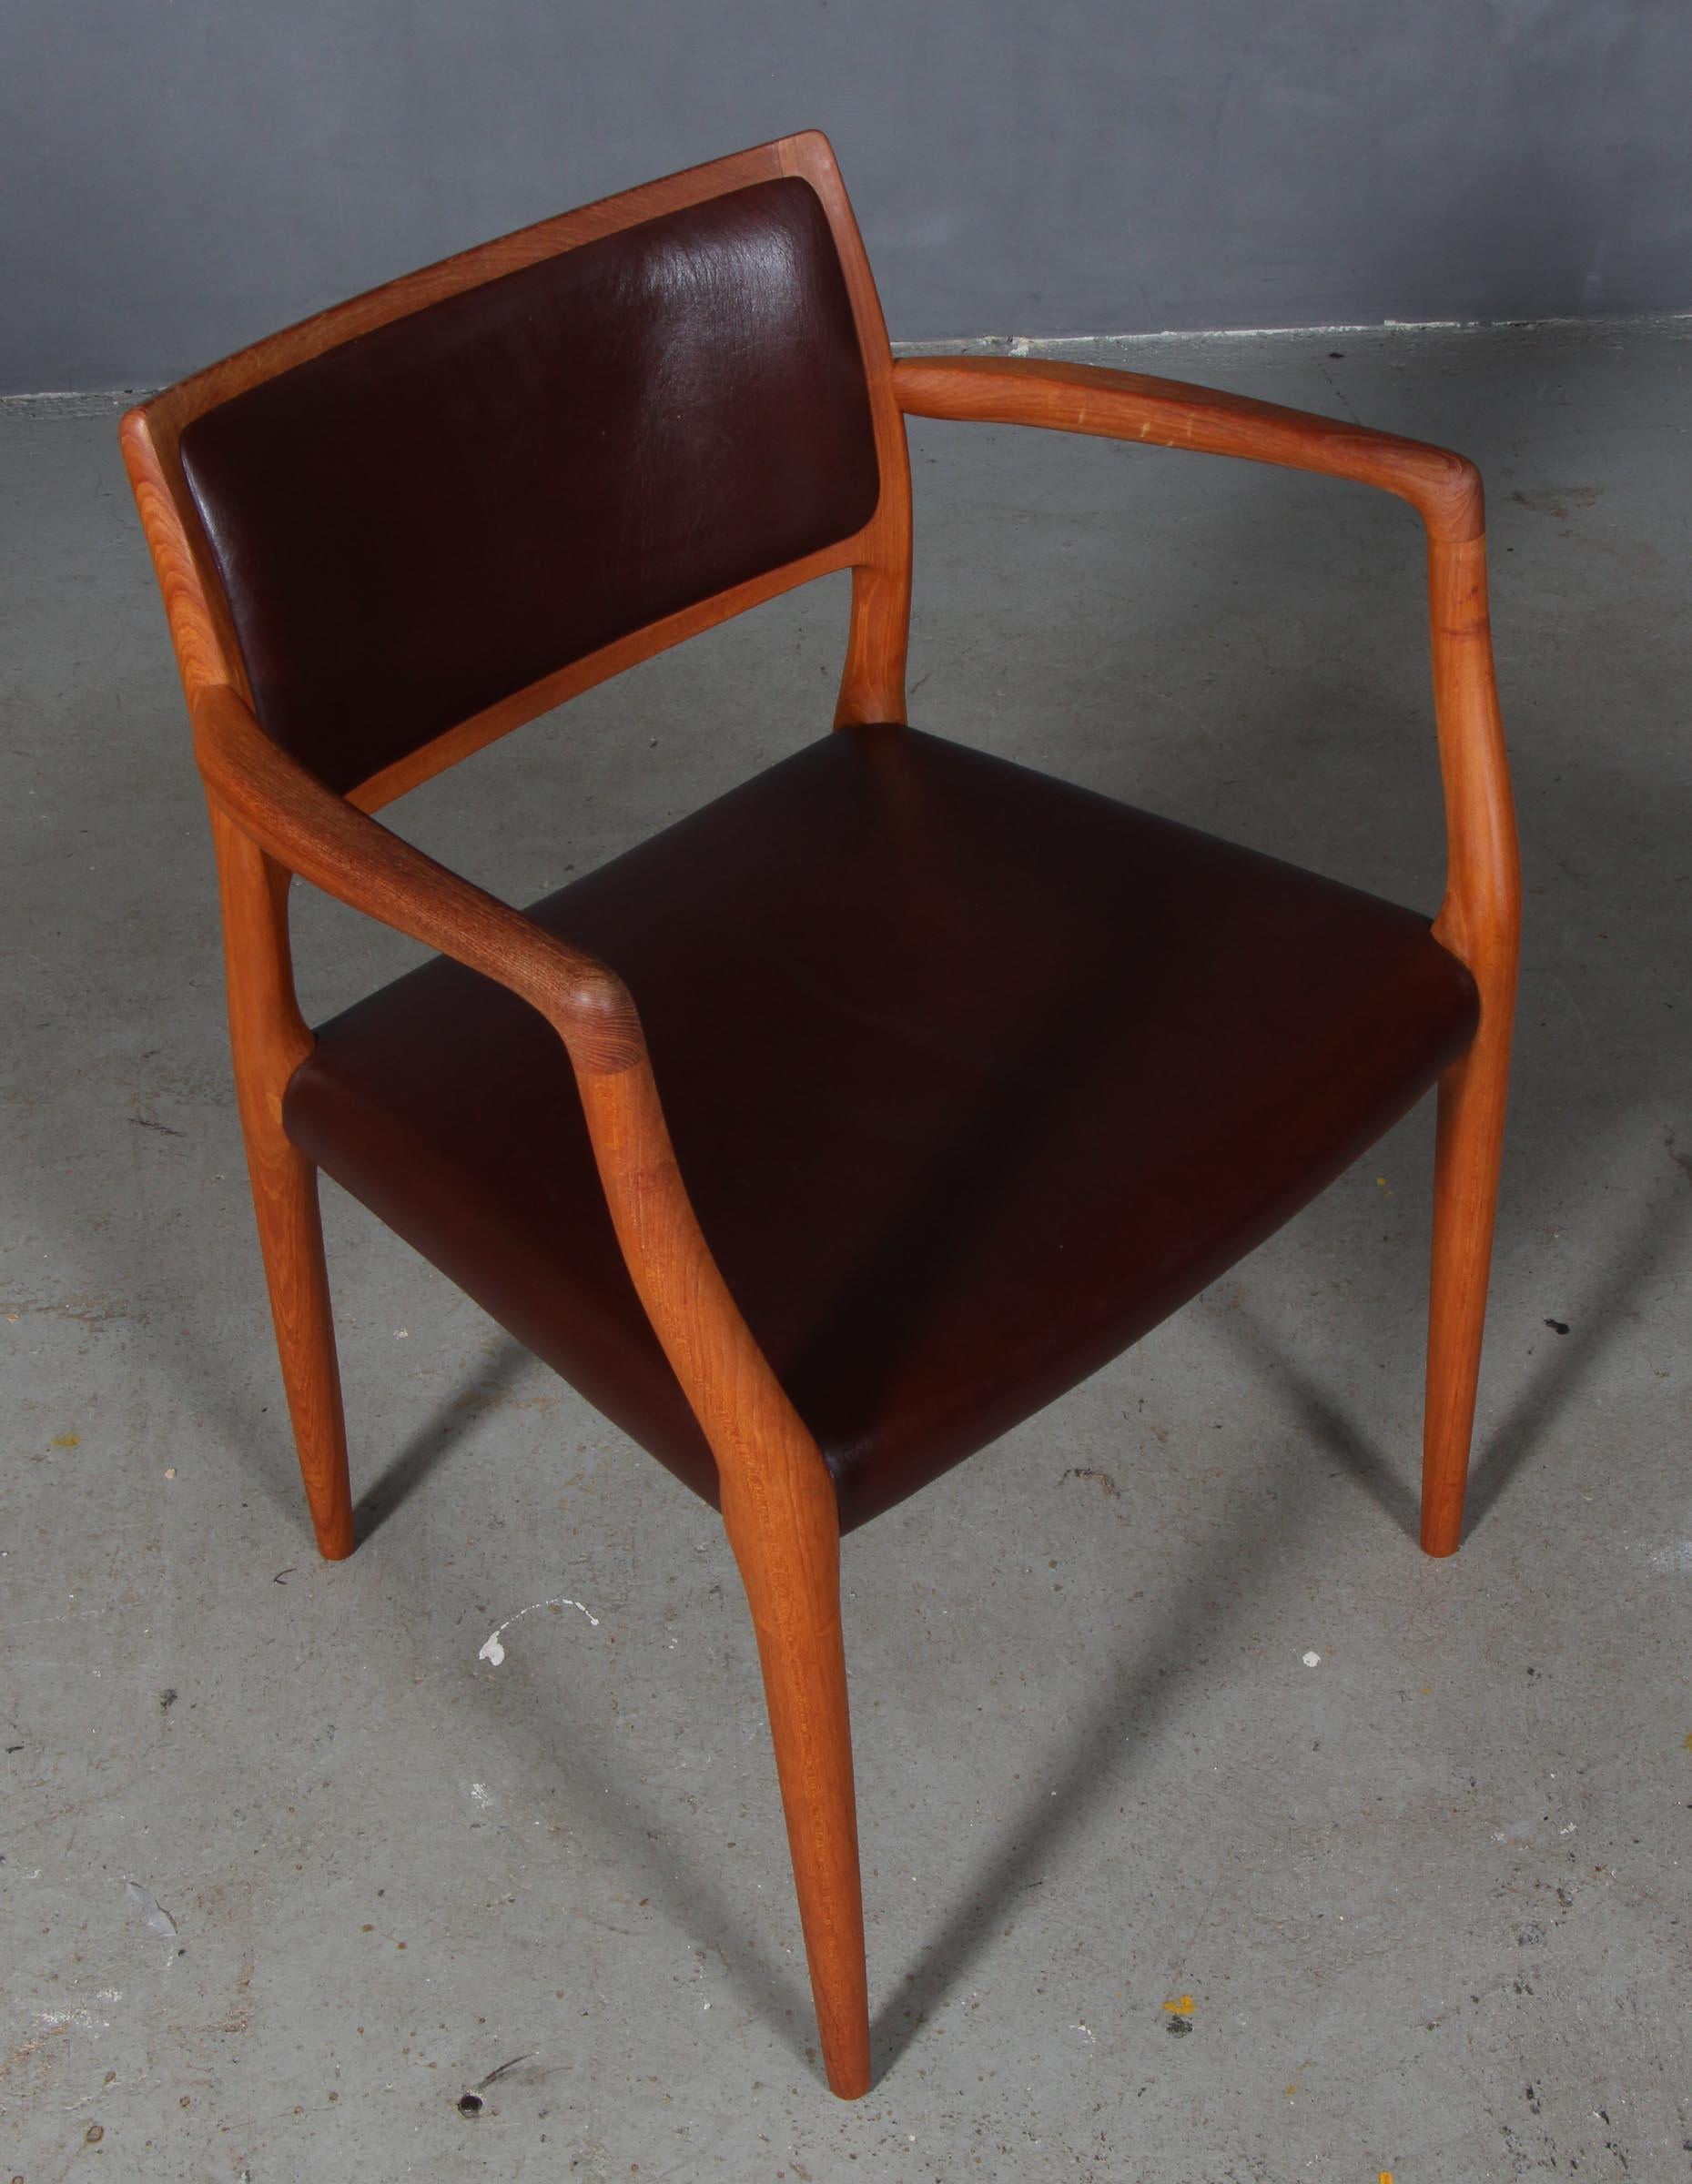 N. O. Møller armchair with frame of solid teak

Seat and back original upholstered with brown leather.

Model 65, made by J. L. Møller, Denmark, 1960s.